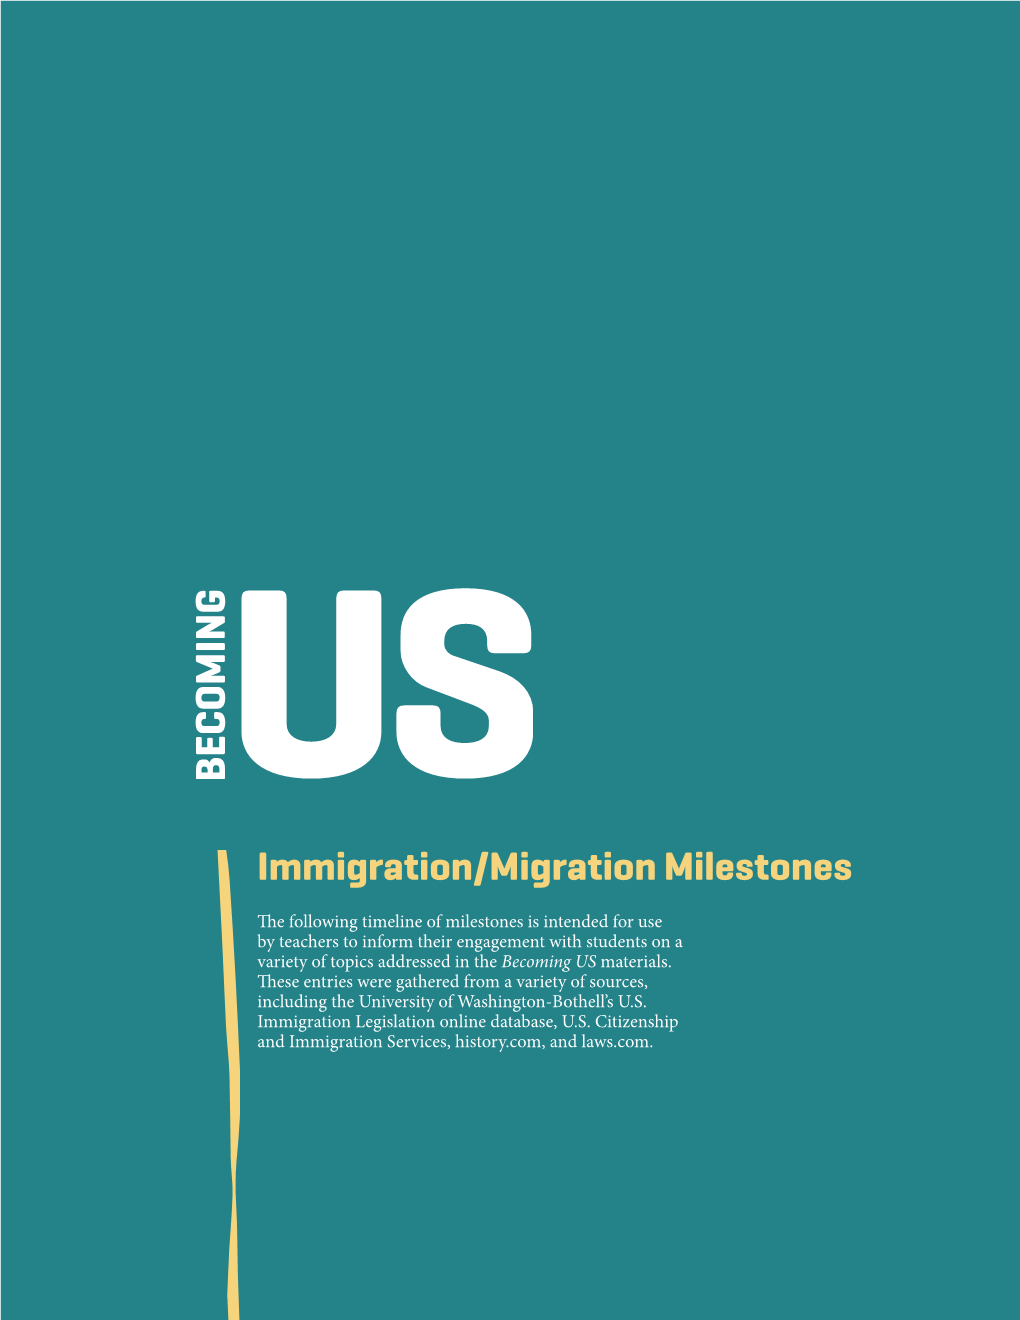 Immigration and Migration Milestones